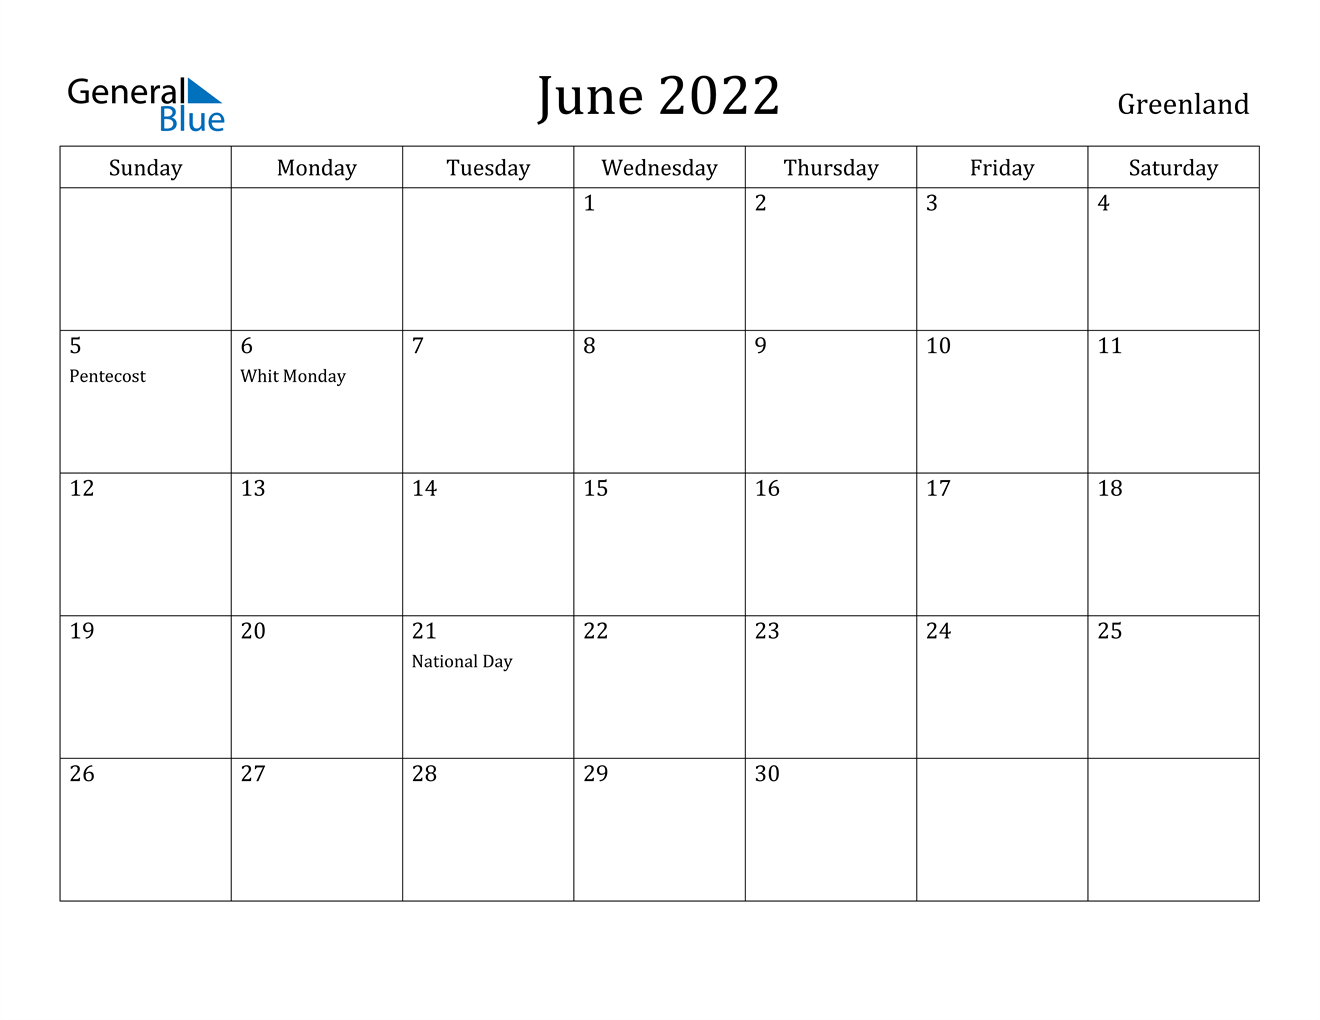 June 2022 Calendar - Greenland